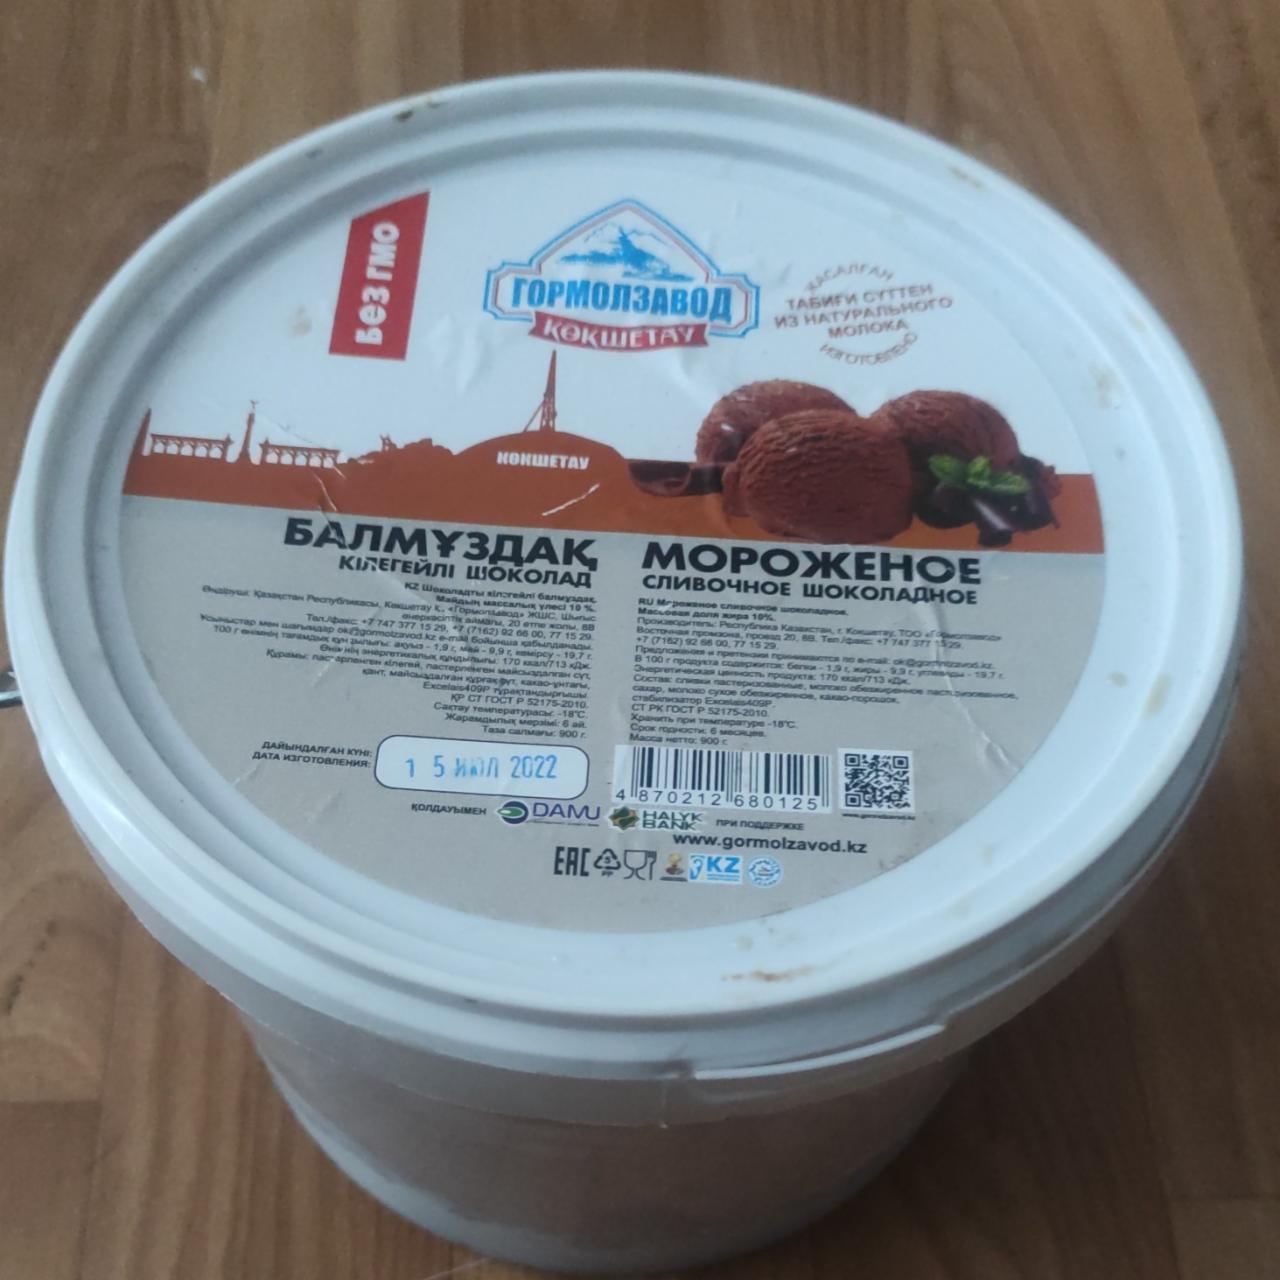 Фото - Мороженое сливочное шоколадное Гормолзавод kz